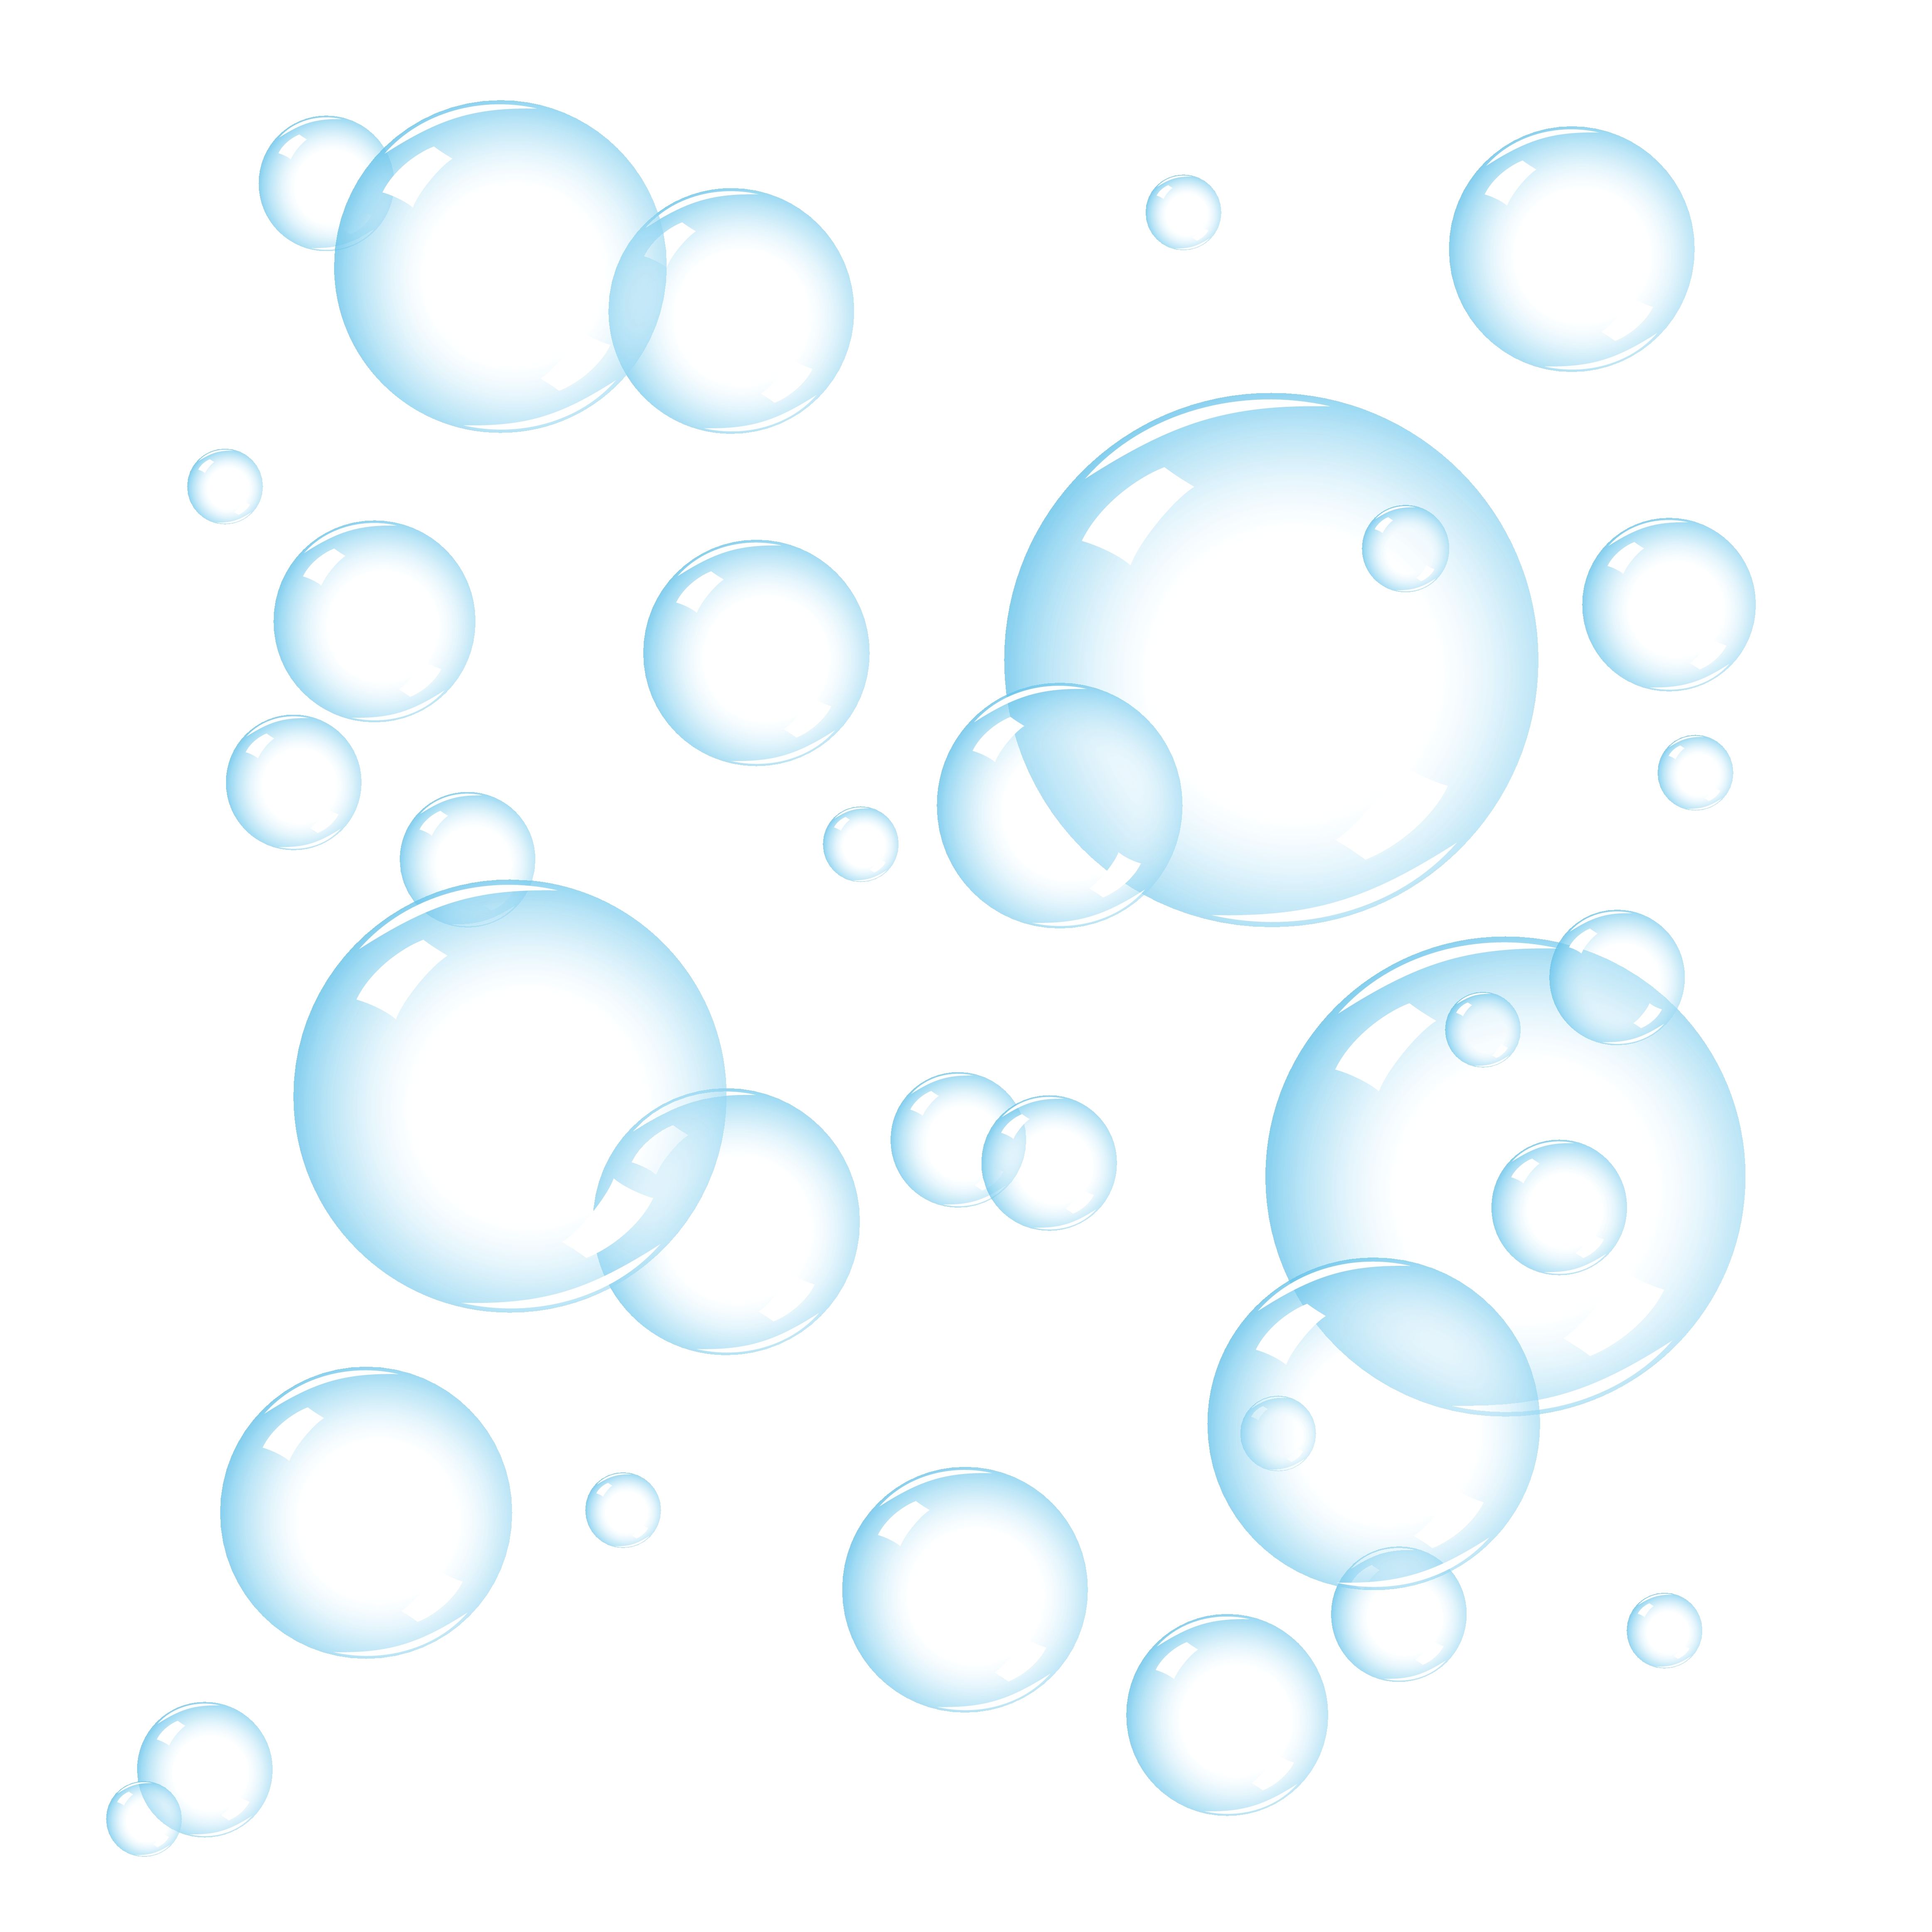 Bubbles clip art.